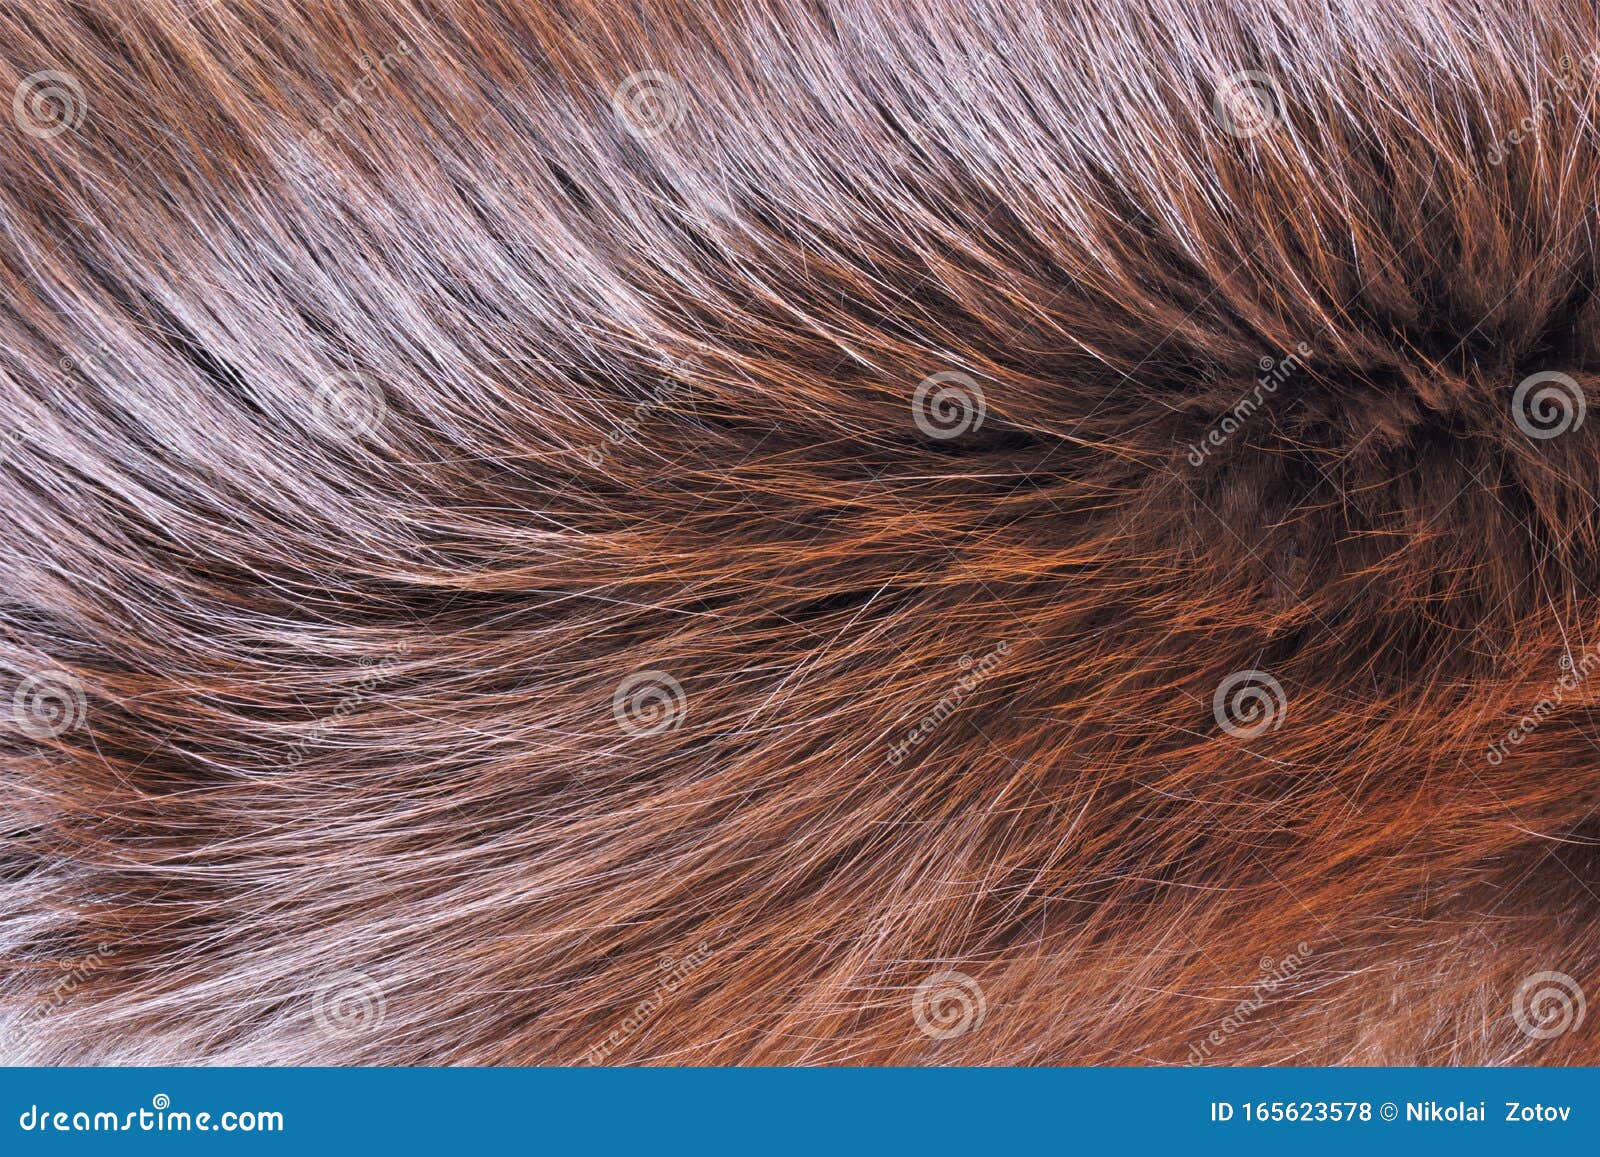 Animals With Brown Fur - European Brown Bear Wild Animal Furry